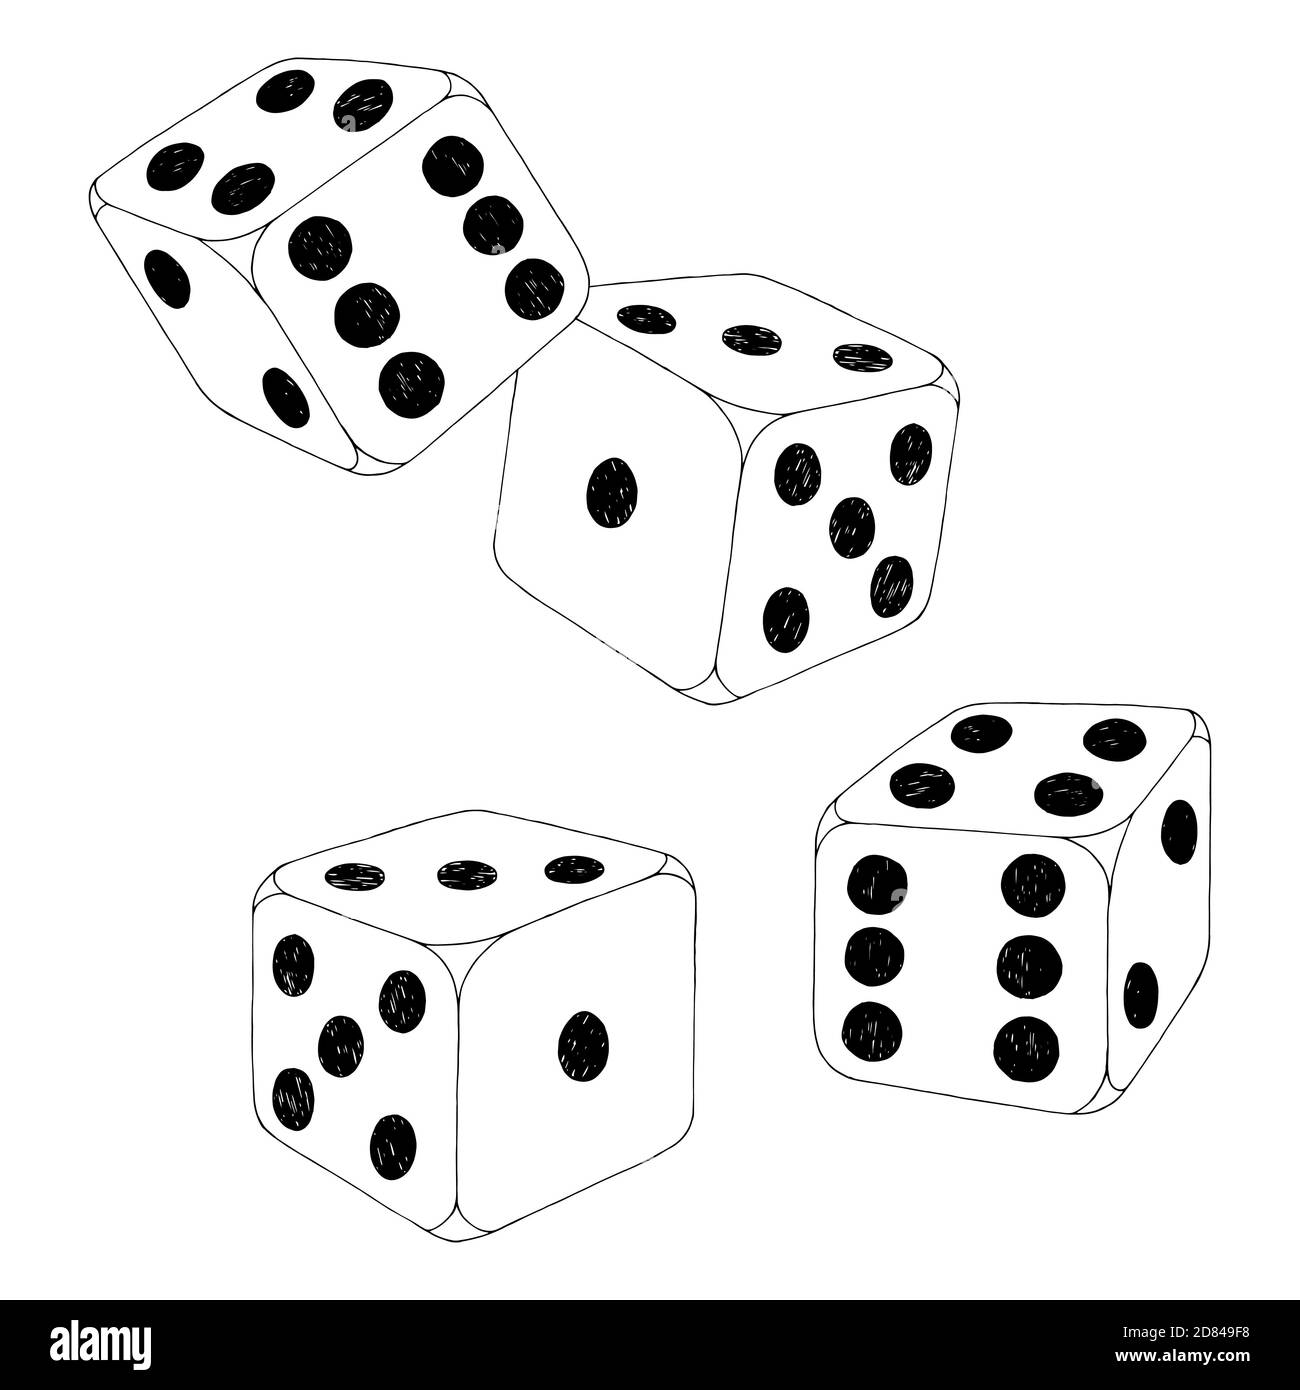 Roll those dice -Fotos und -Bildmaterial in hoher Auflösung